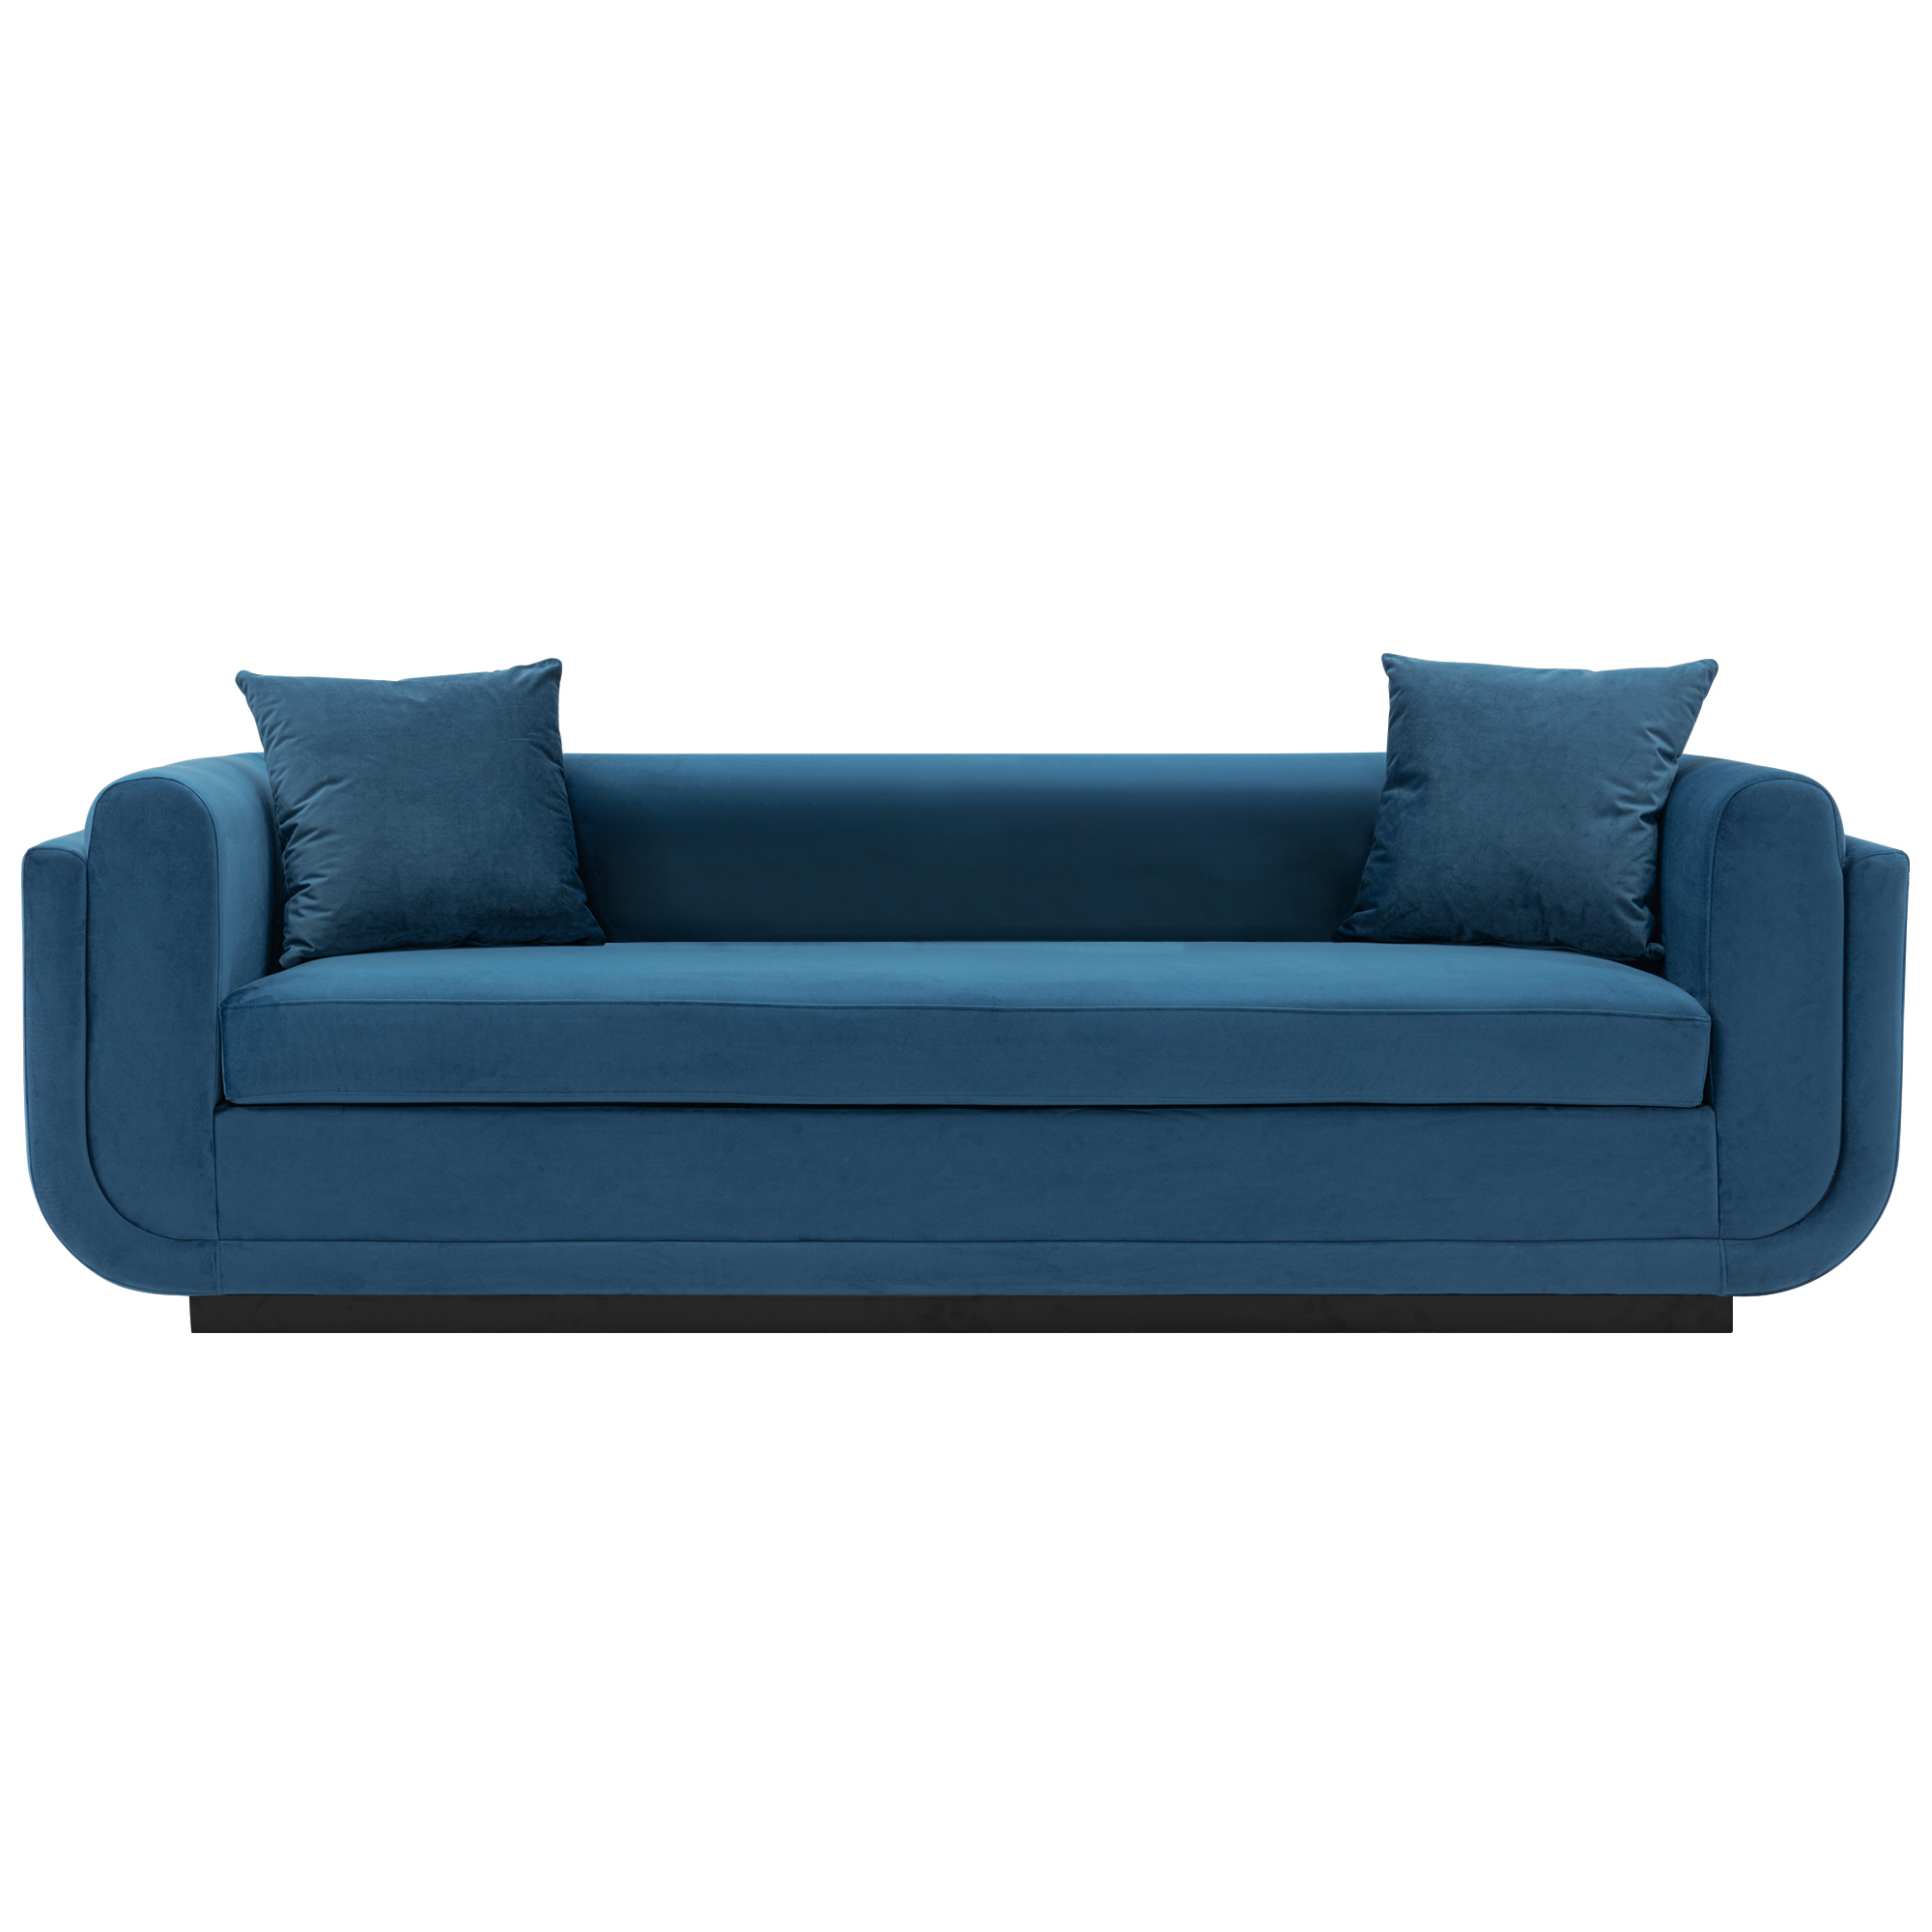 Manhattan Comfort, Contemporary Edmonda Velvet Sofa in Sapphire Blue, Primary Color Blue, Included (qty.) 1 Model SF014